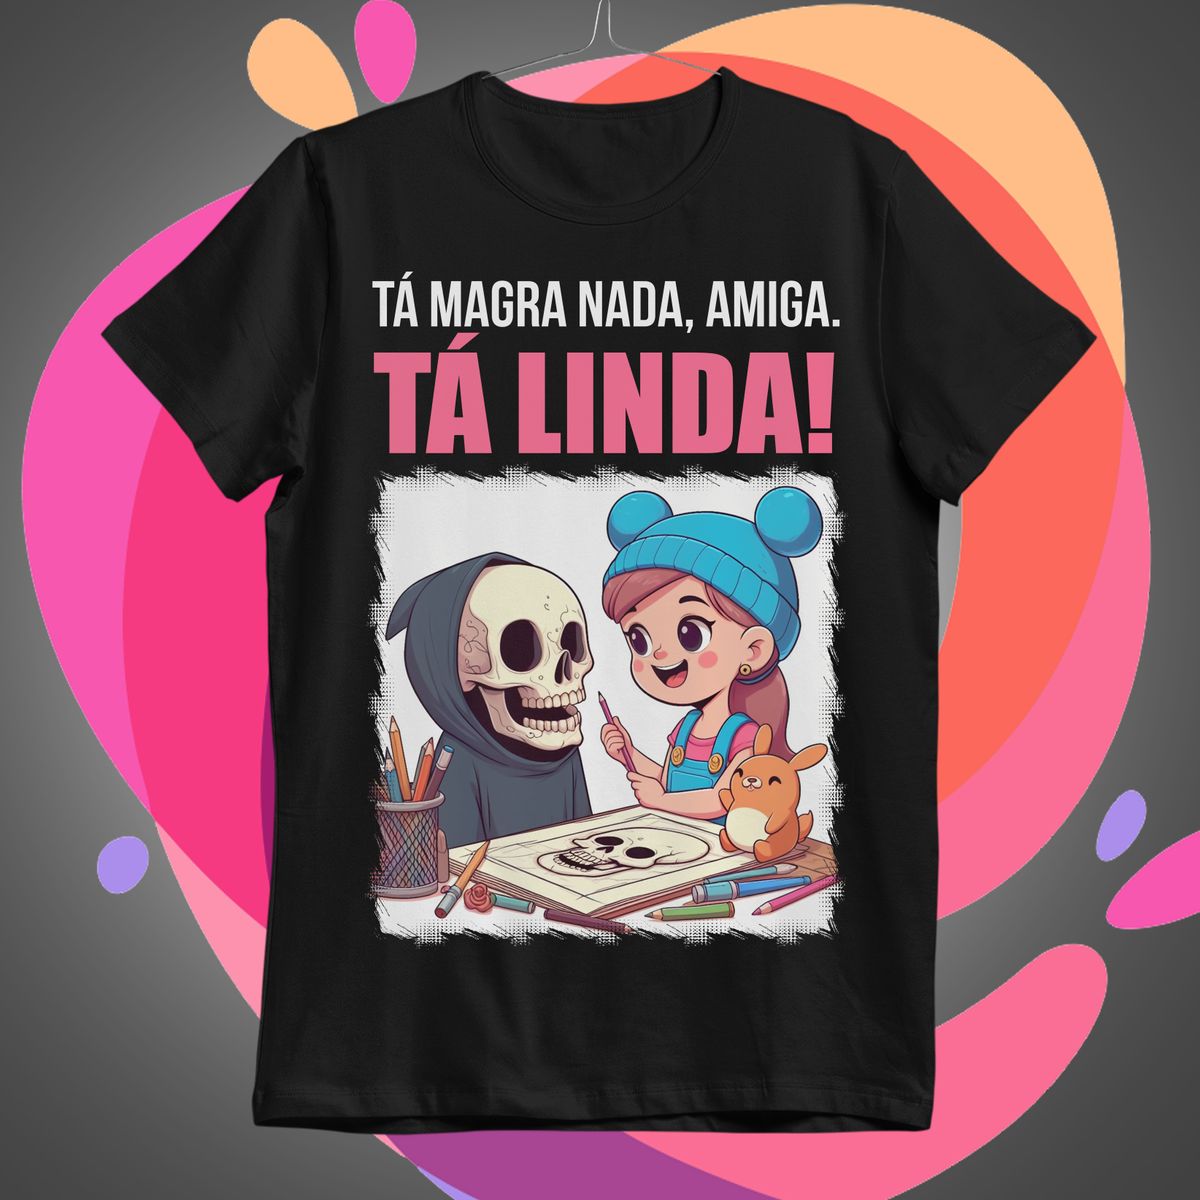 Nome do produto: Meme Ta Linda Camiseta